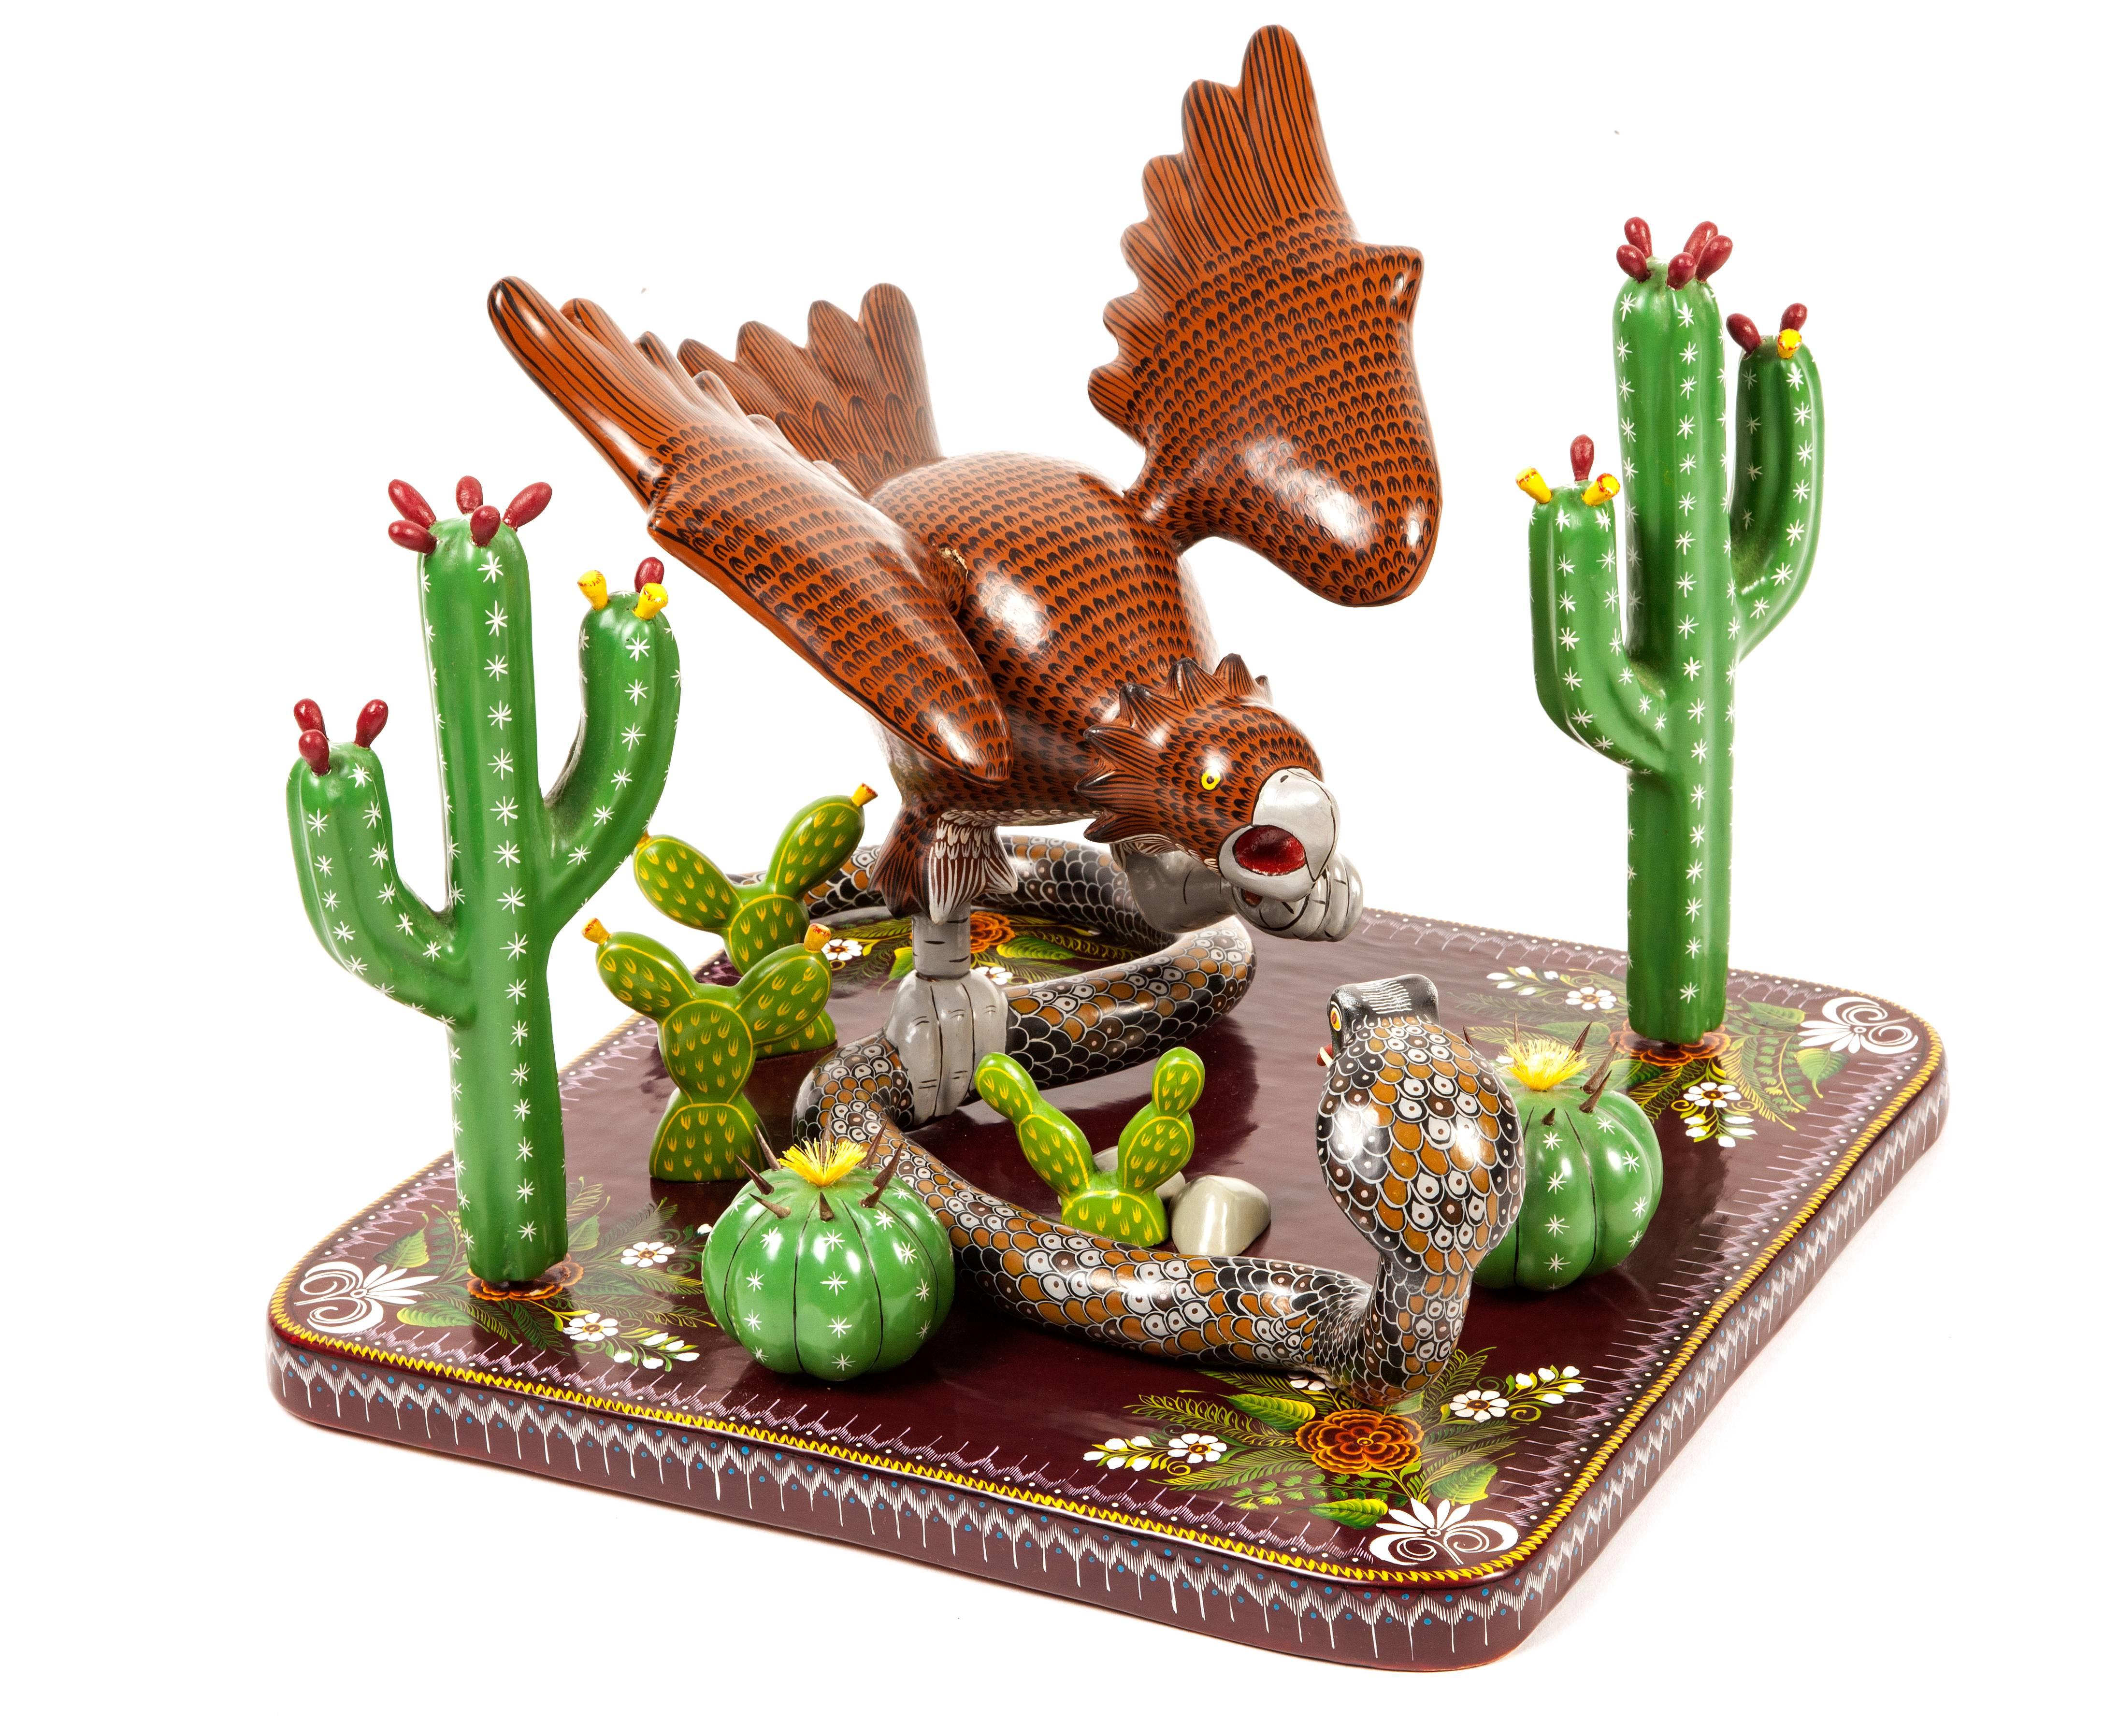 Juan Zeferino Rivera Figurative Sculpture - 12'' Aguila Real / Wood carving Lacquer Sculpture Mexican Folk Art